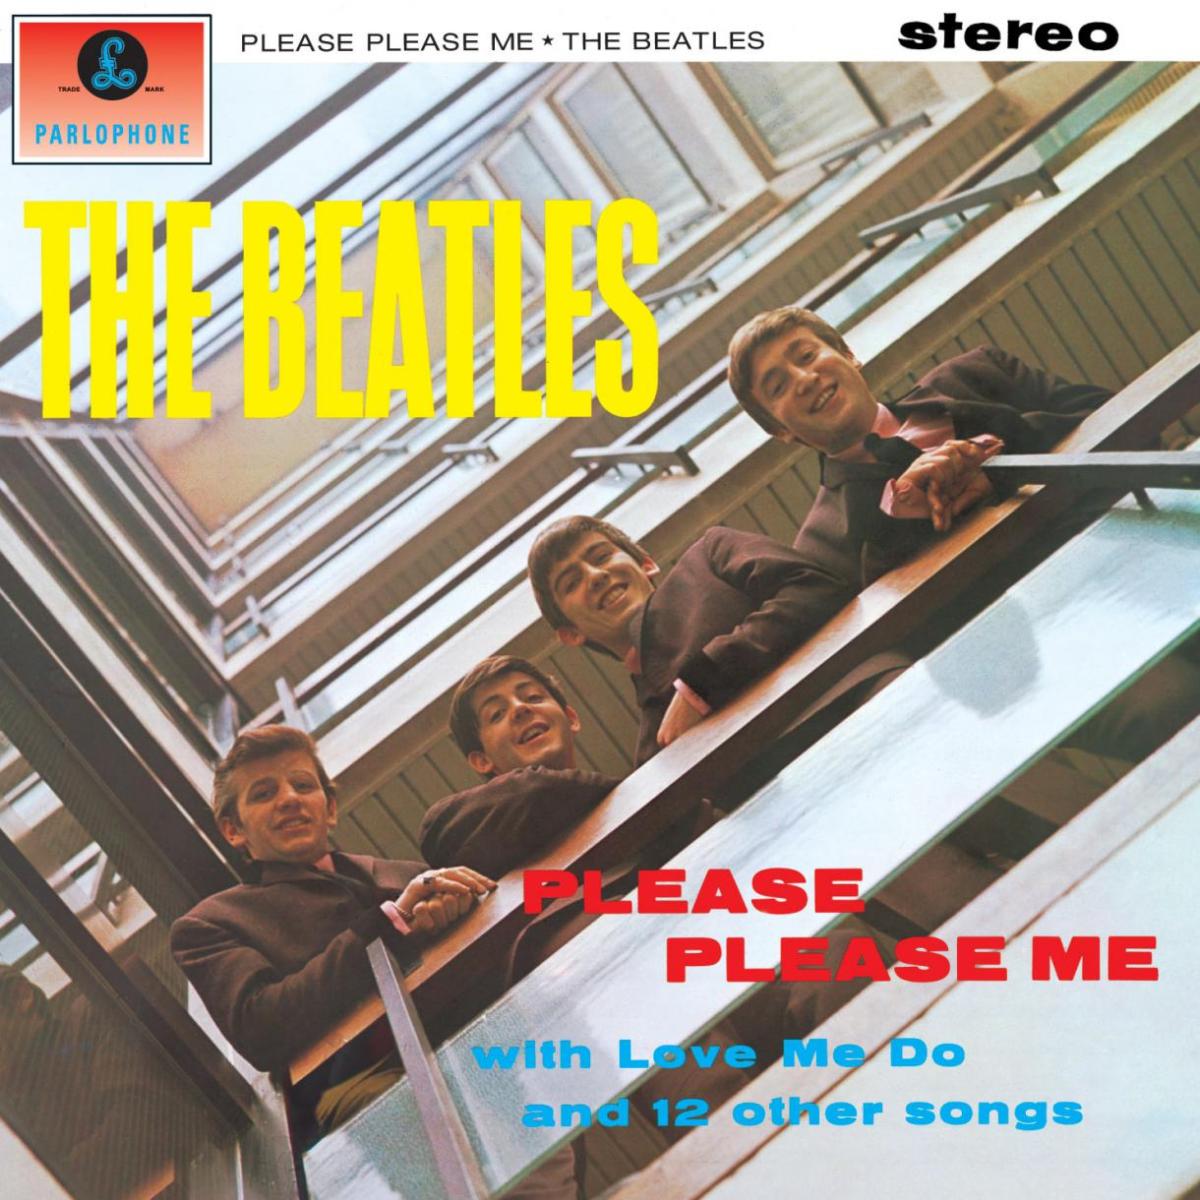 The Beatles – Please Please Me